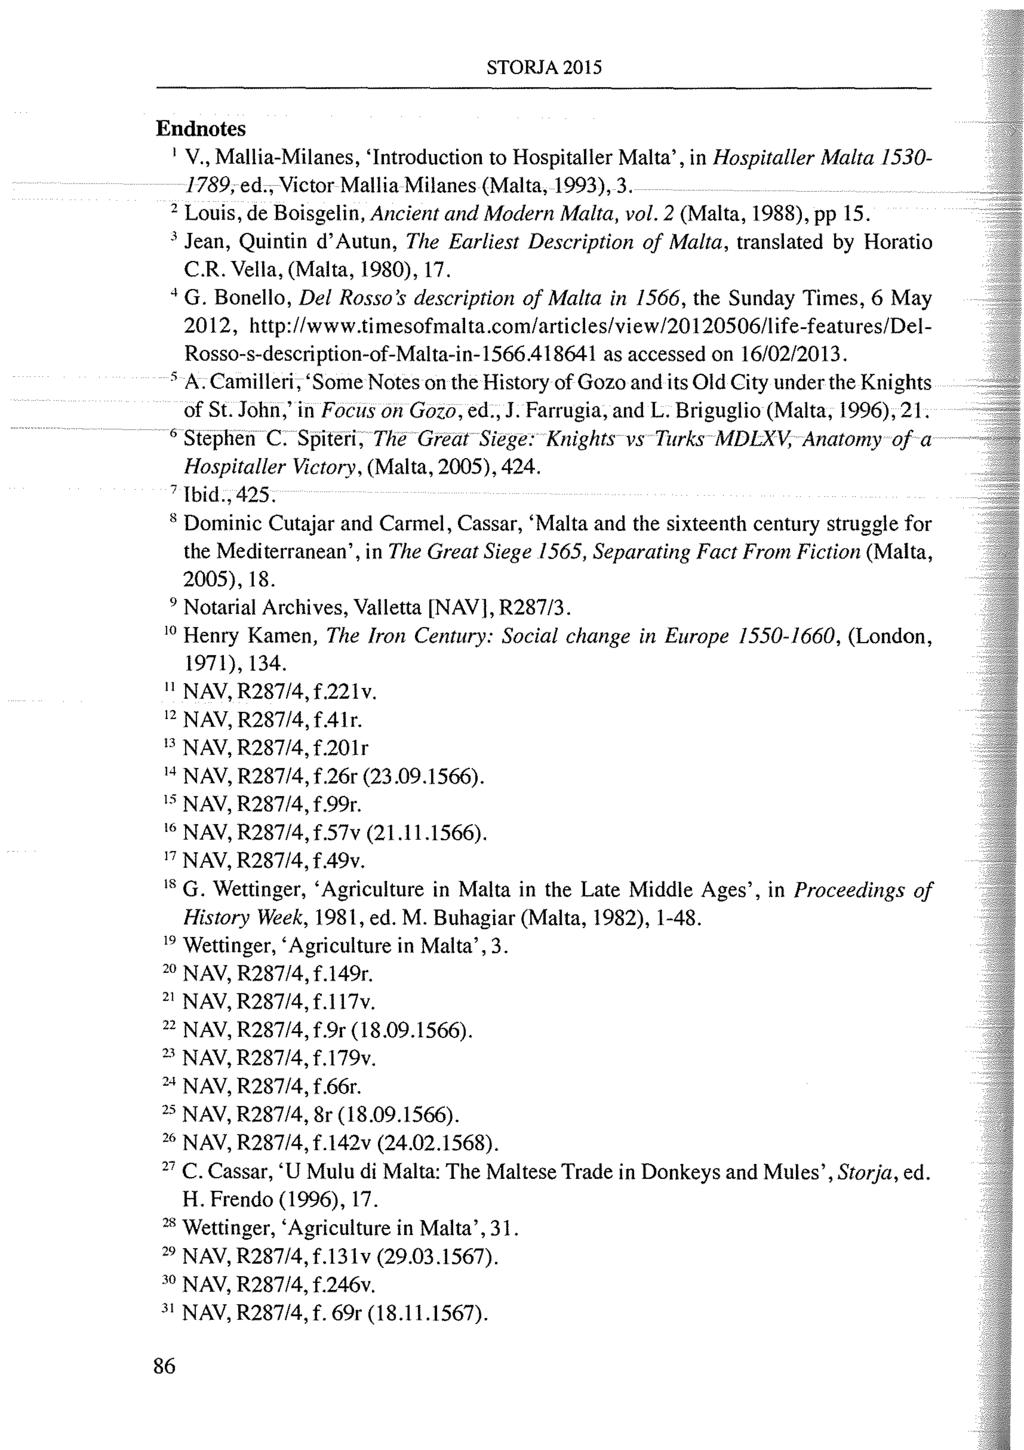 STORJA2015 Endnotes I v., Mallia-Milanes, 'Introduction to Hospitaller Malta', in Hospital/er Malta 1530-1789; ed.; Victor Mallia Milanes (Malta, 1993),3.